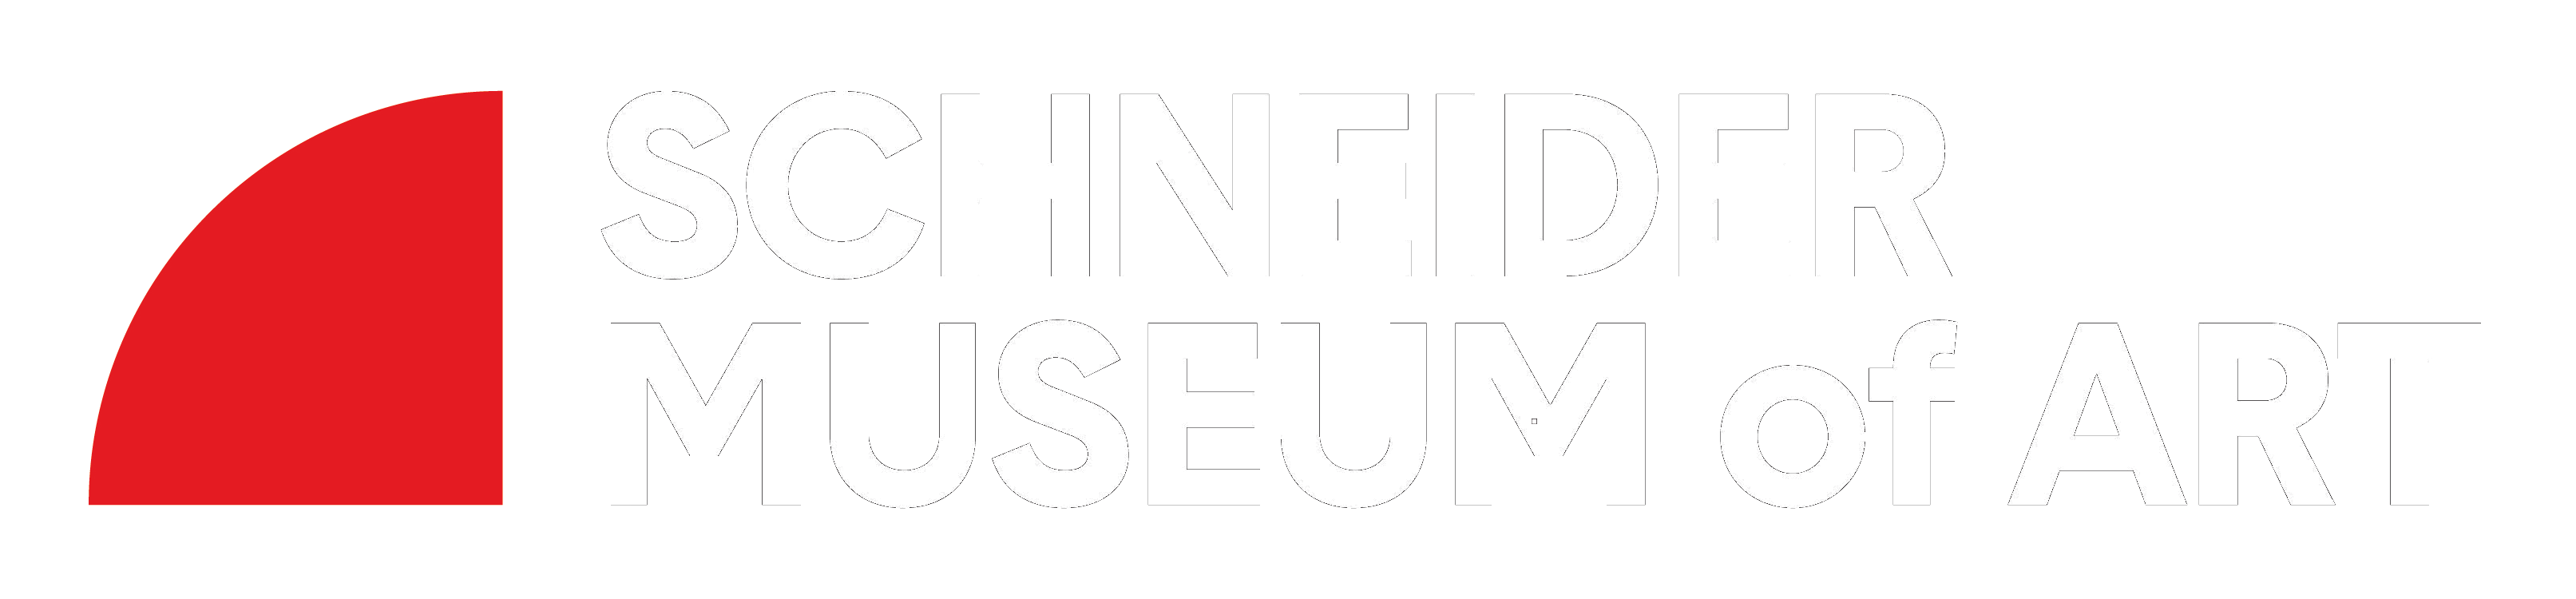 Schneider Museum of Art logo